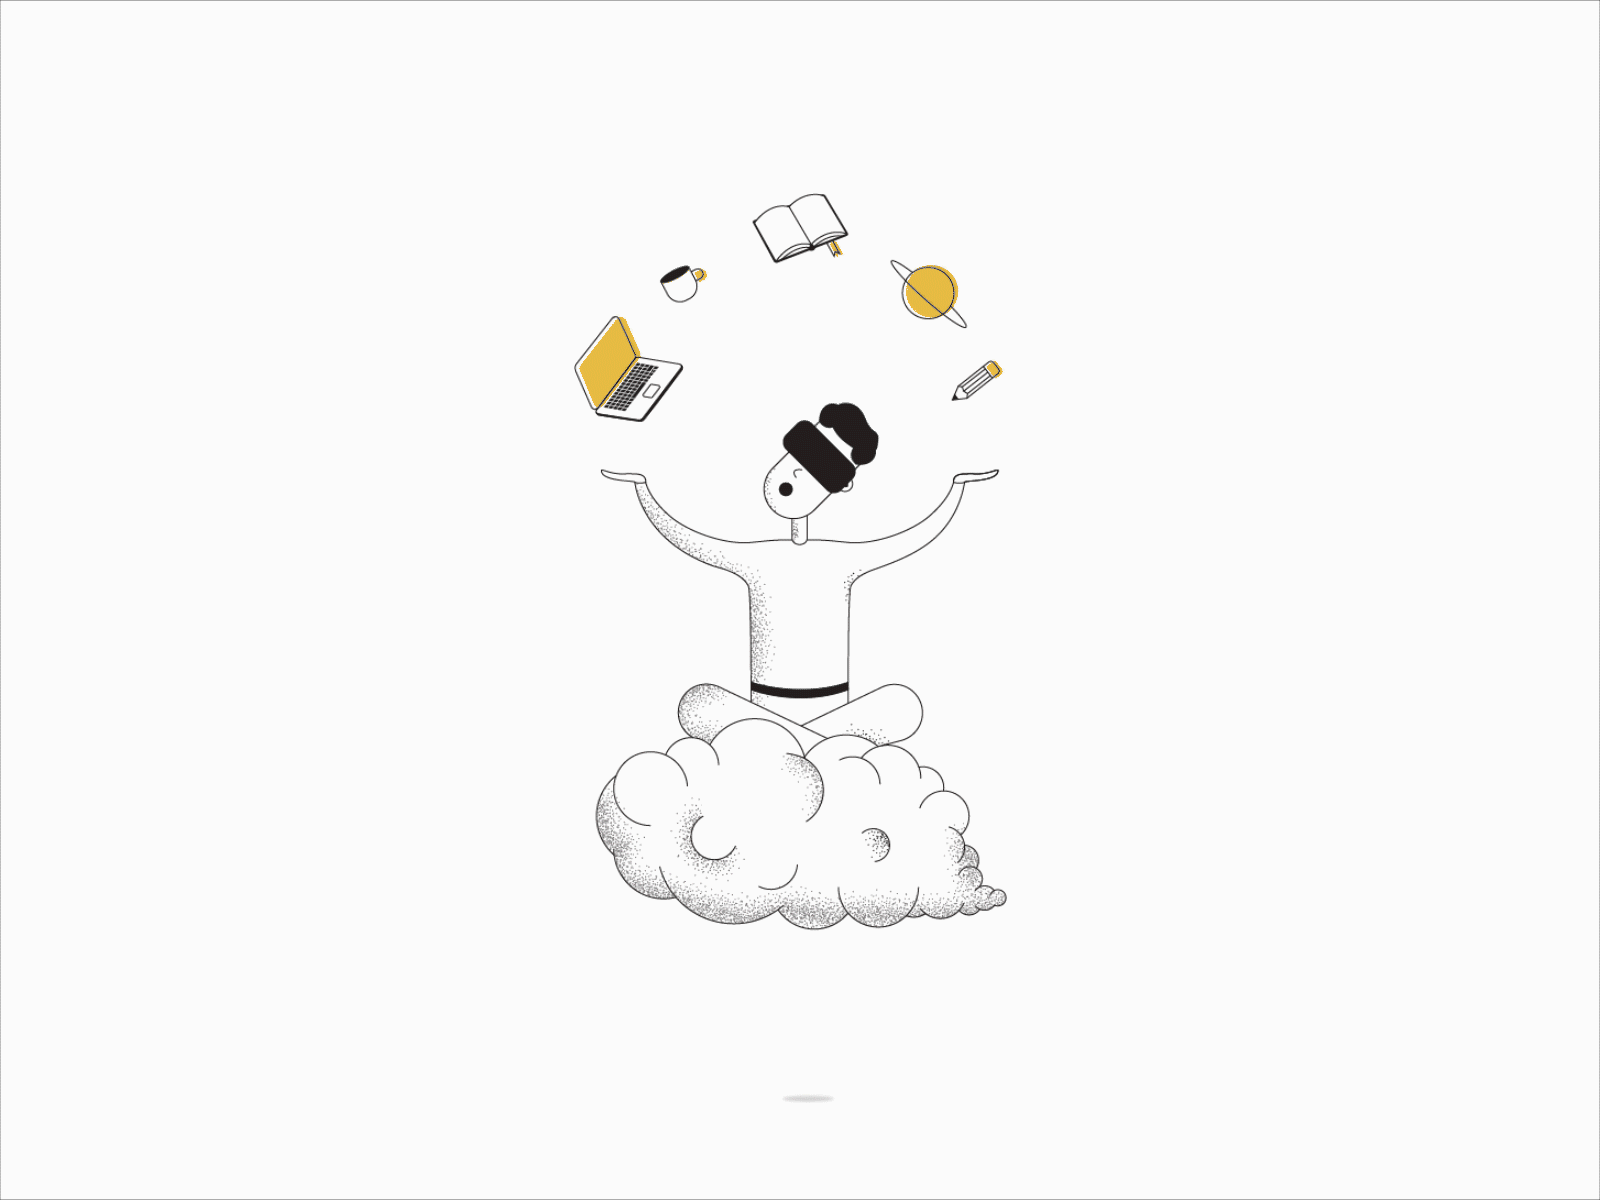 Animation - A guy on a cloud